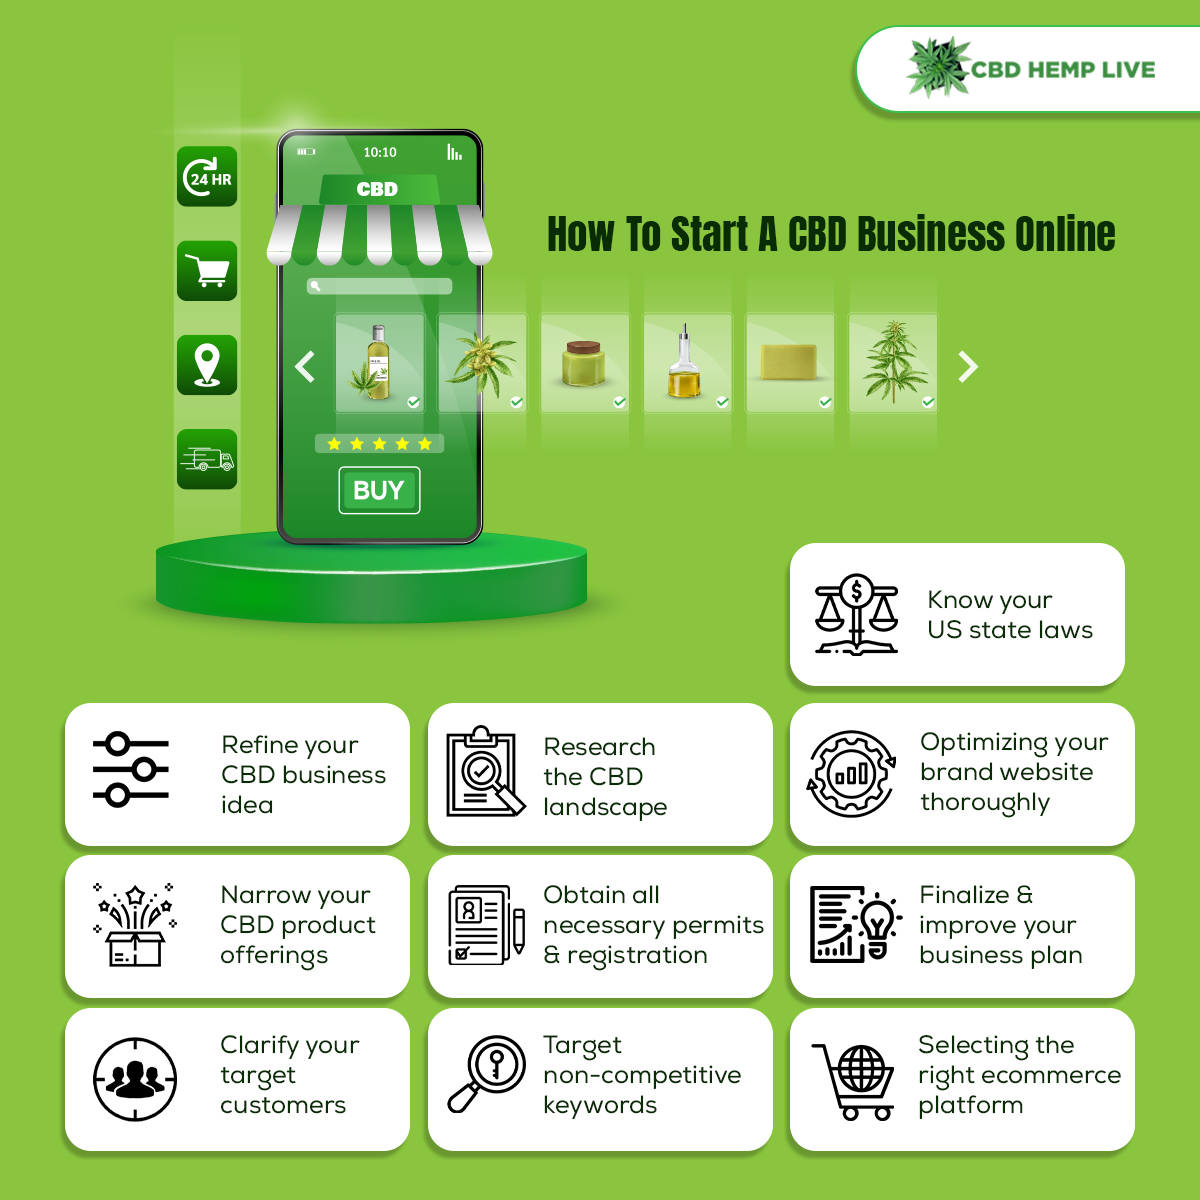 How To Start A CBD Business Online